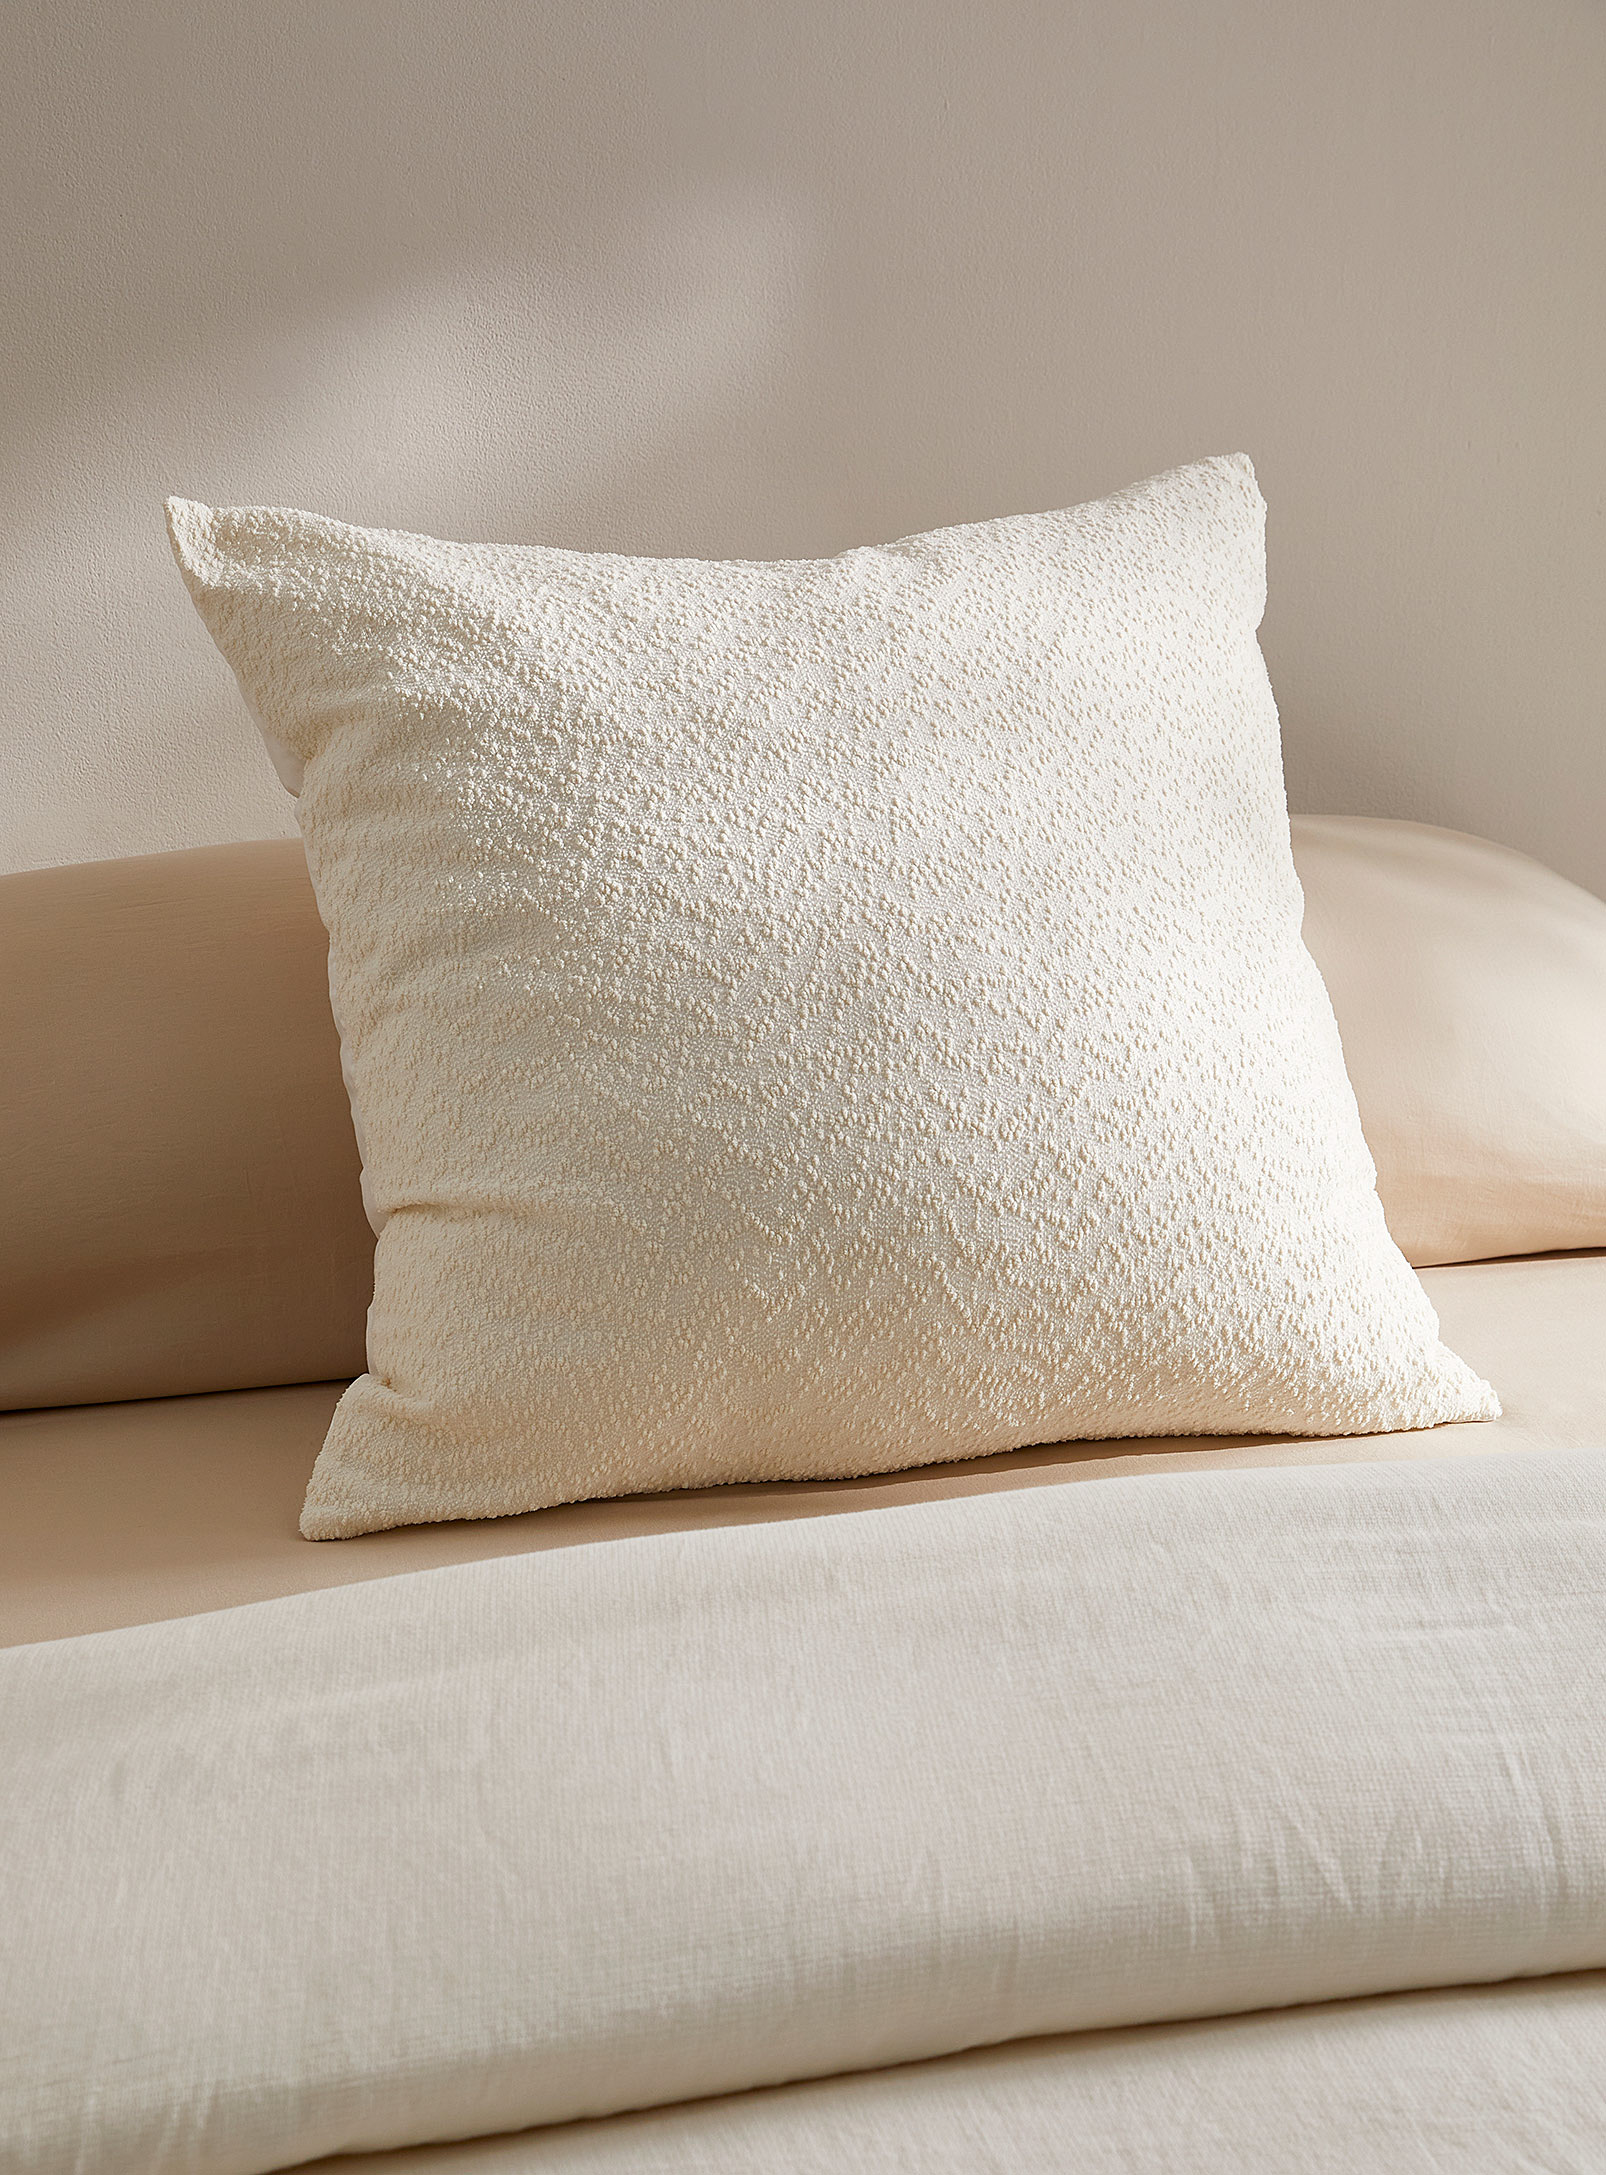 Simons Maison - Thin bouclé Euro pillow sham 66 x 66 cm